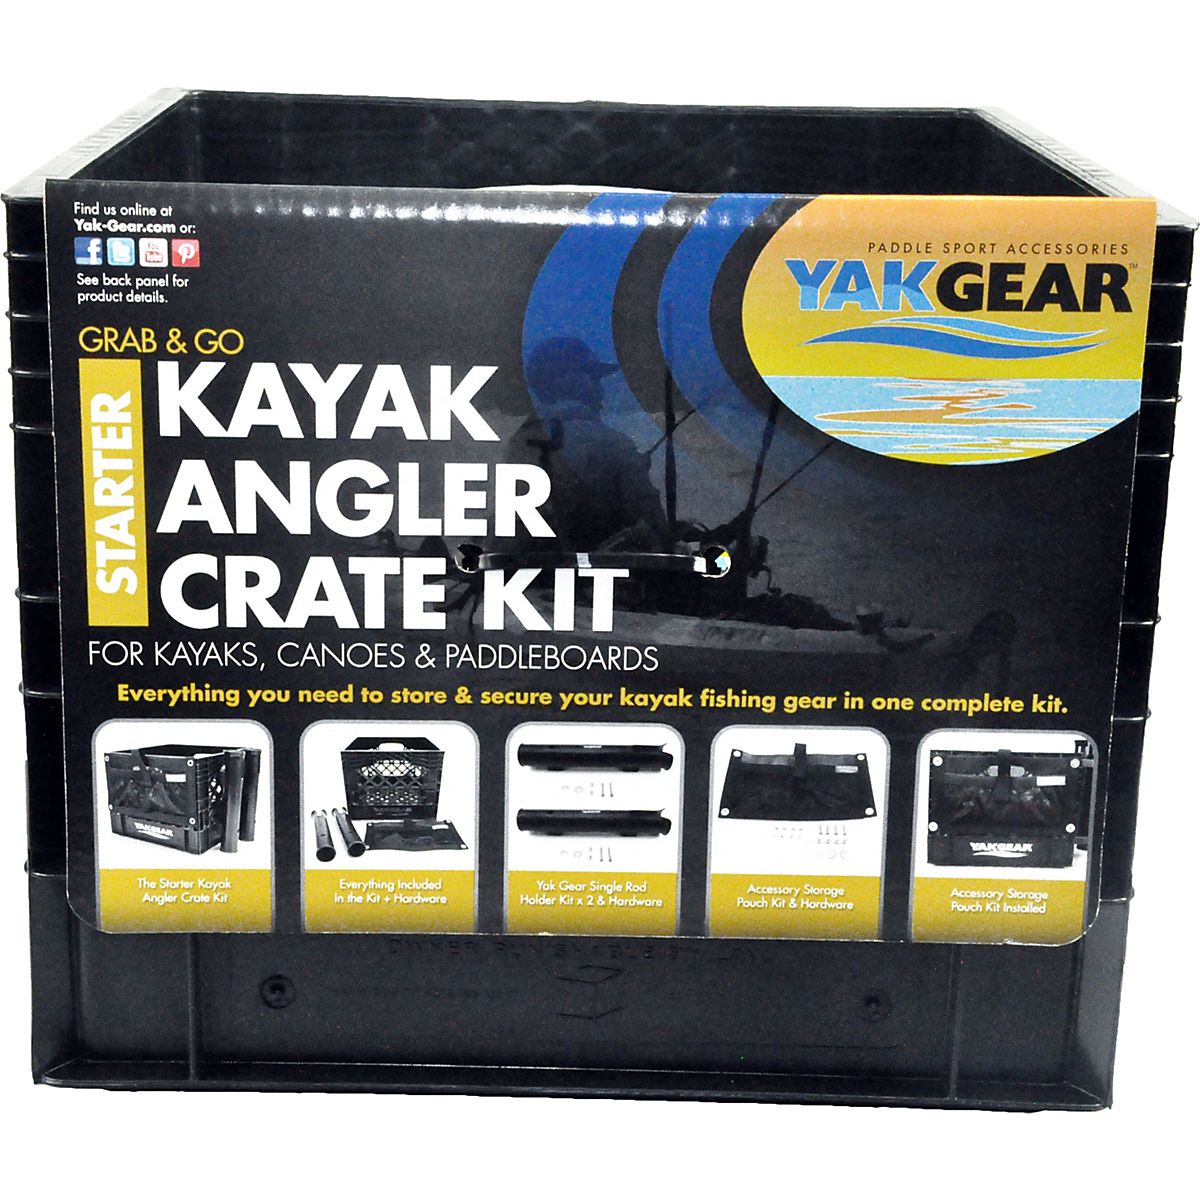 Buy YakGear Kayak Accessories from PartsVu